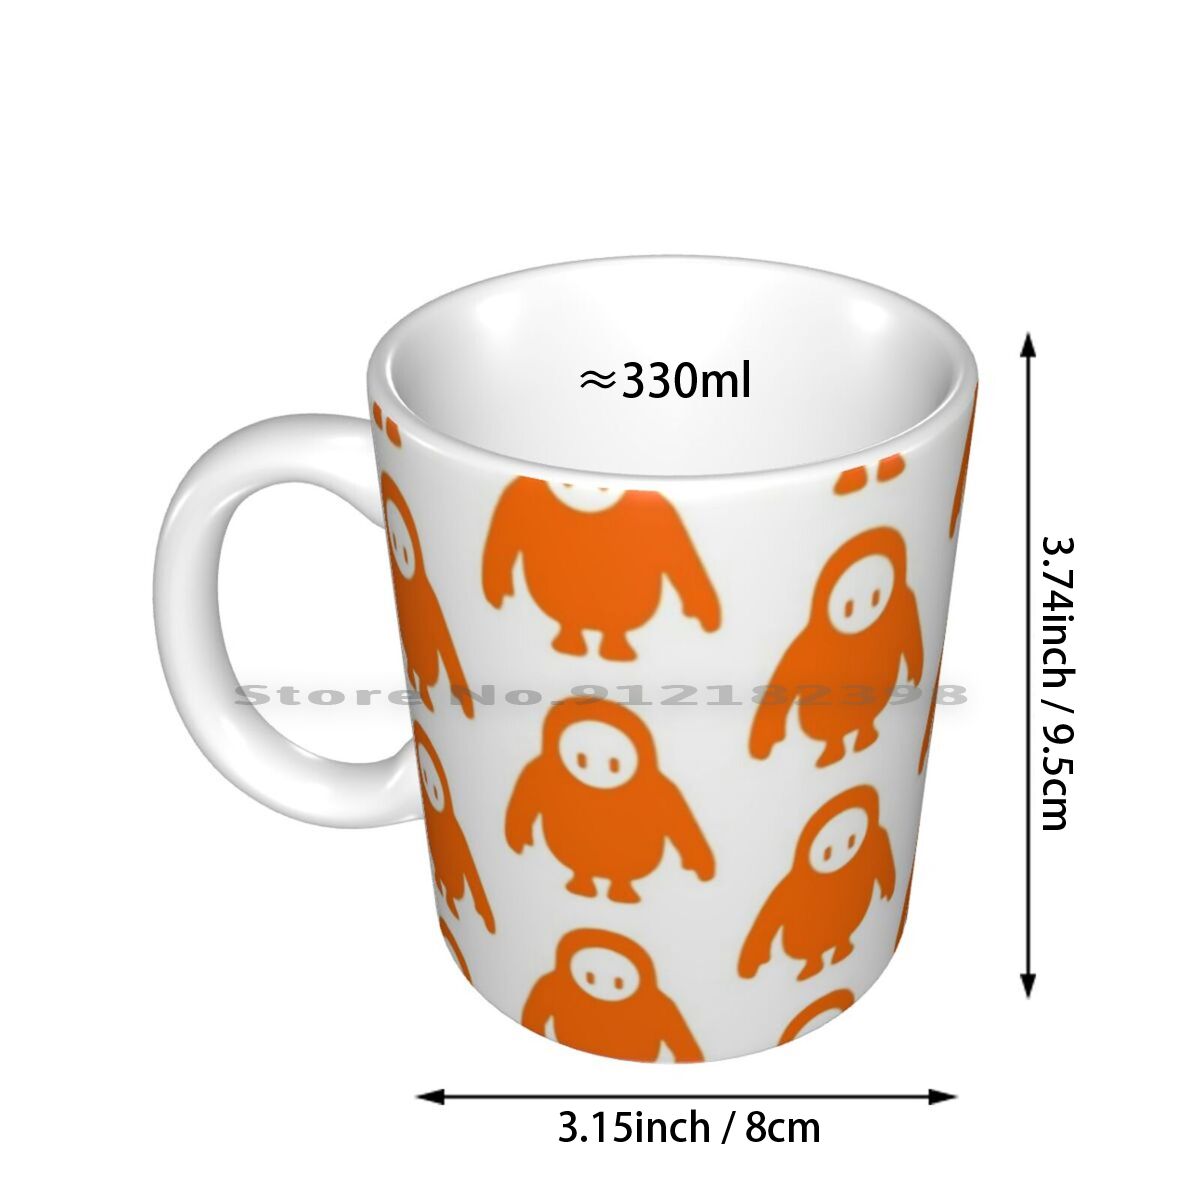 Fall Guy Orange Ceramic Mugs Coffee Cups Milk Tea Mug Ps4 Pc Gaming Cartoon Cute Simple 1 - Fall Guys Plush